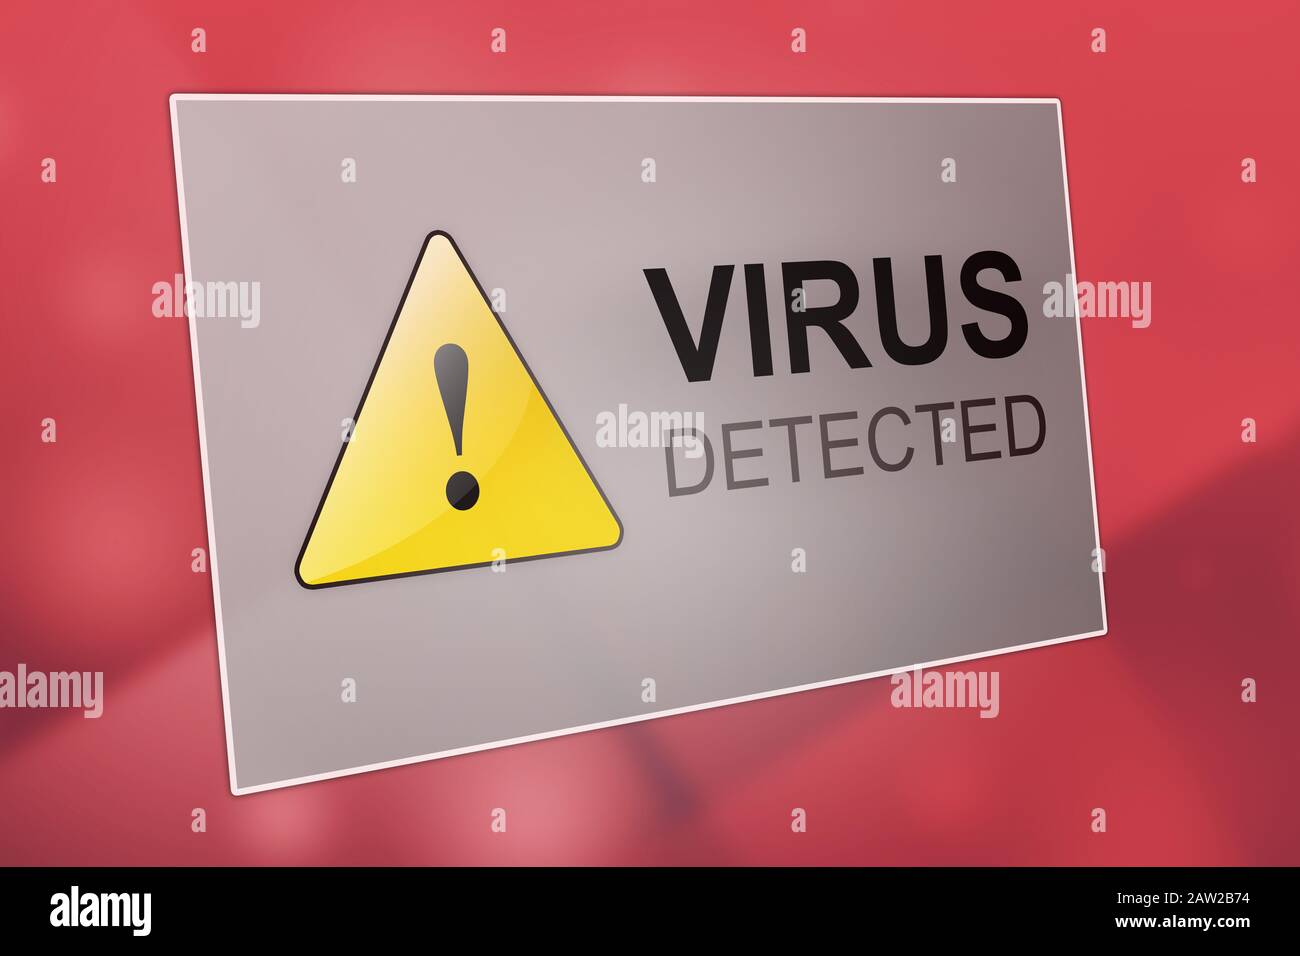 Virus detected - computer virus detection - spyware concept Stock Photo